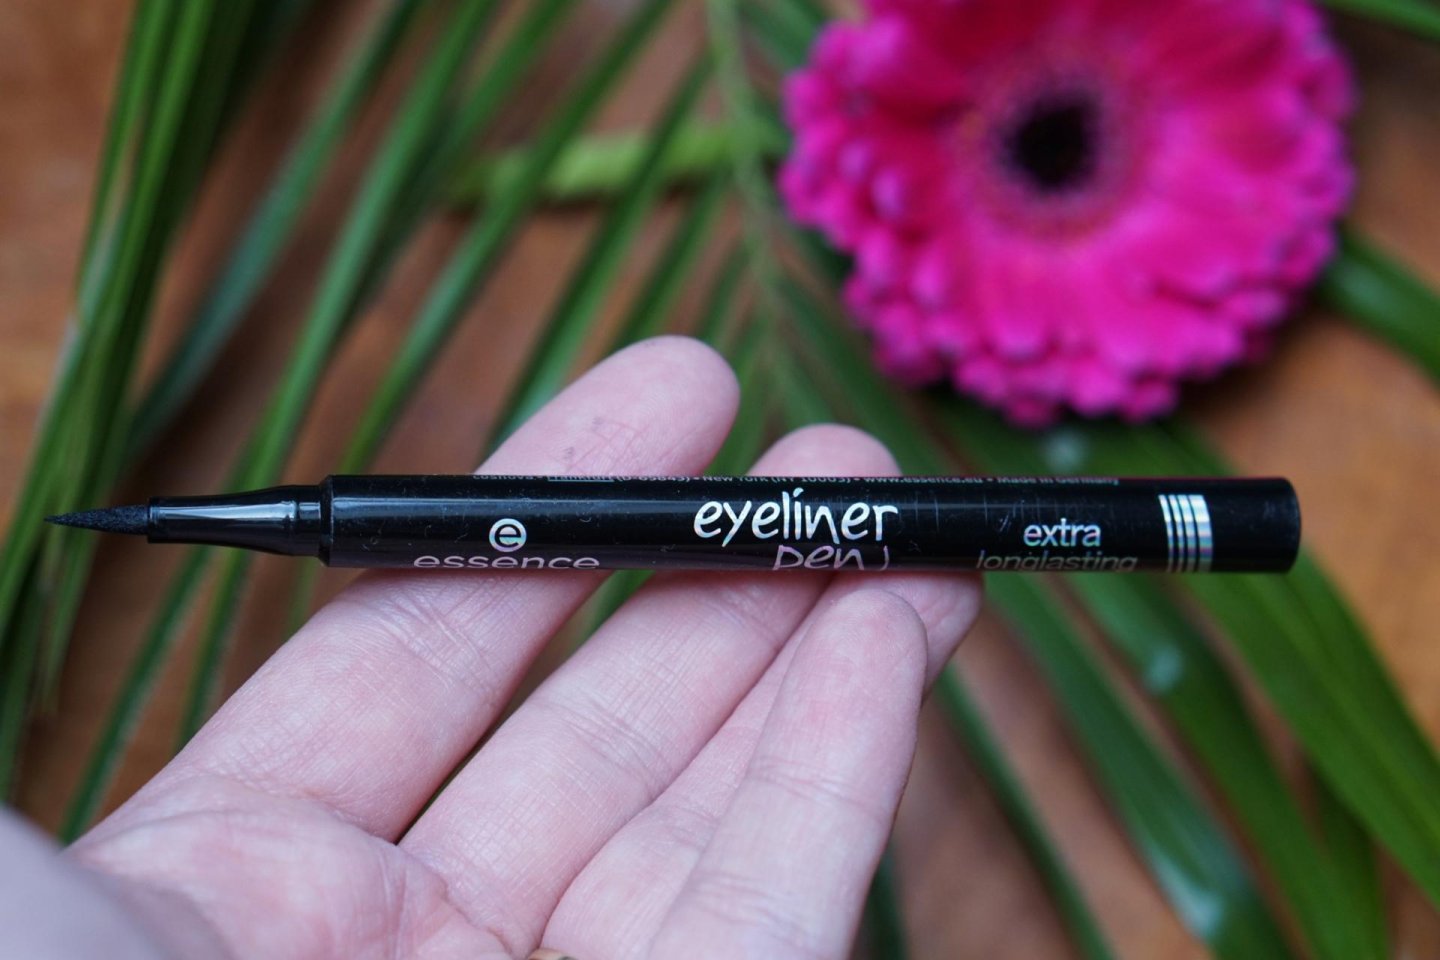 Essence eyeliner pen